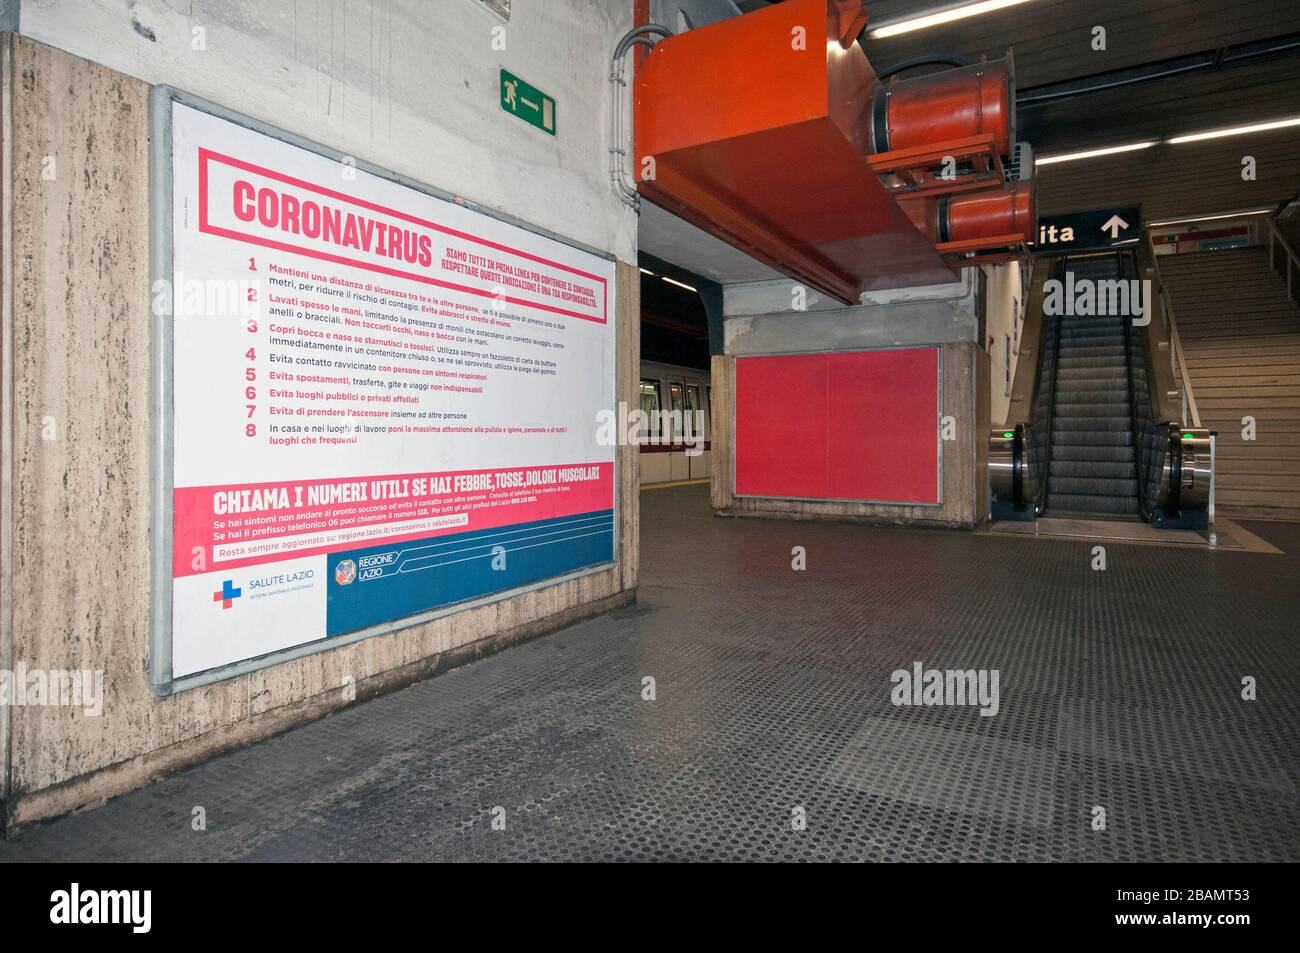 Information sign at subway station during the Coronavirus emergency, Rome, Italy Stock Photo